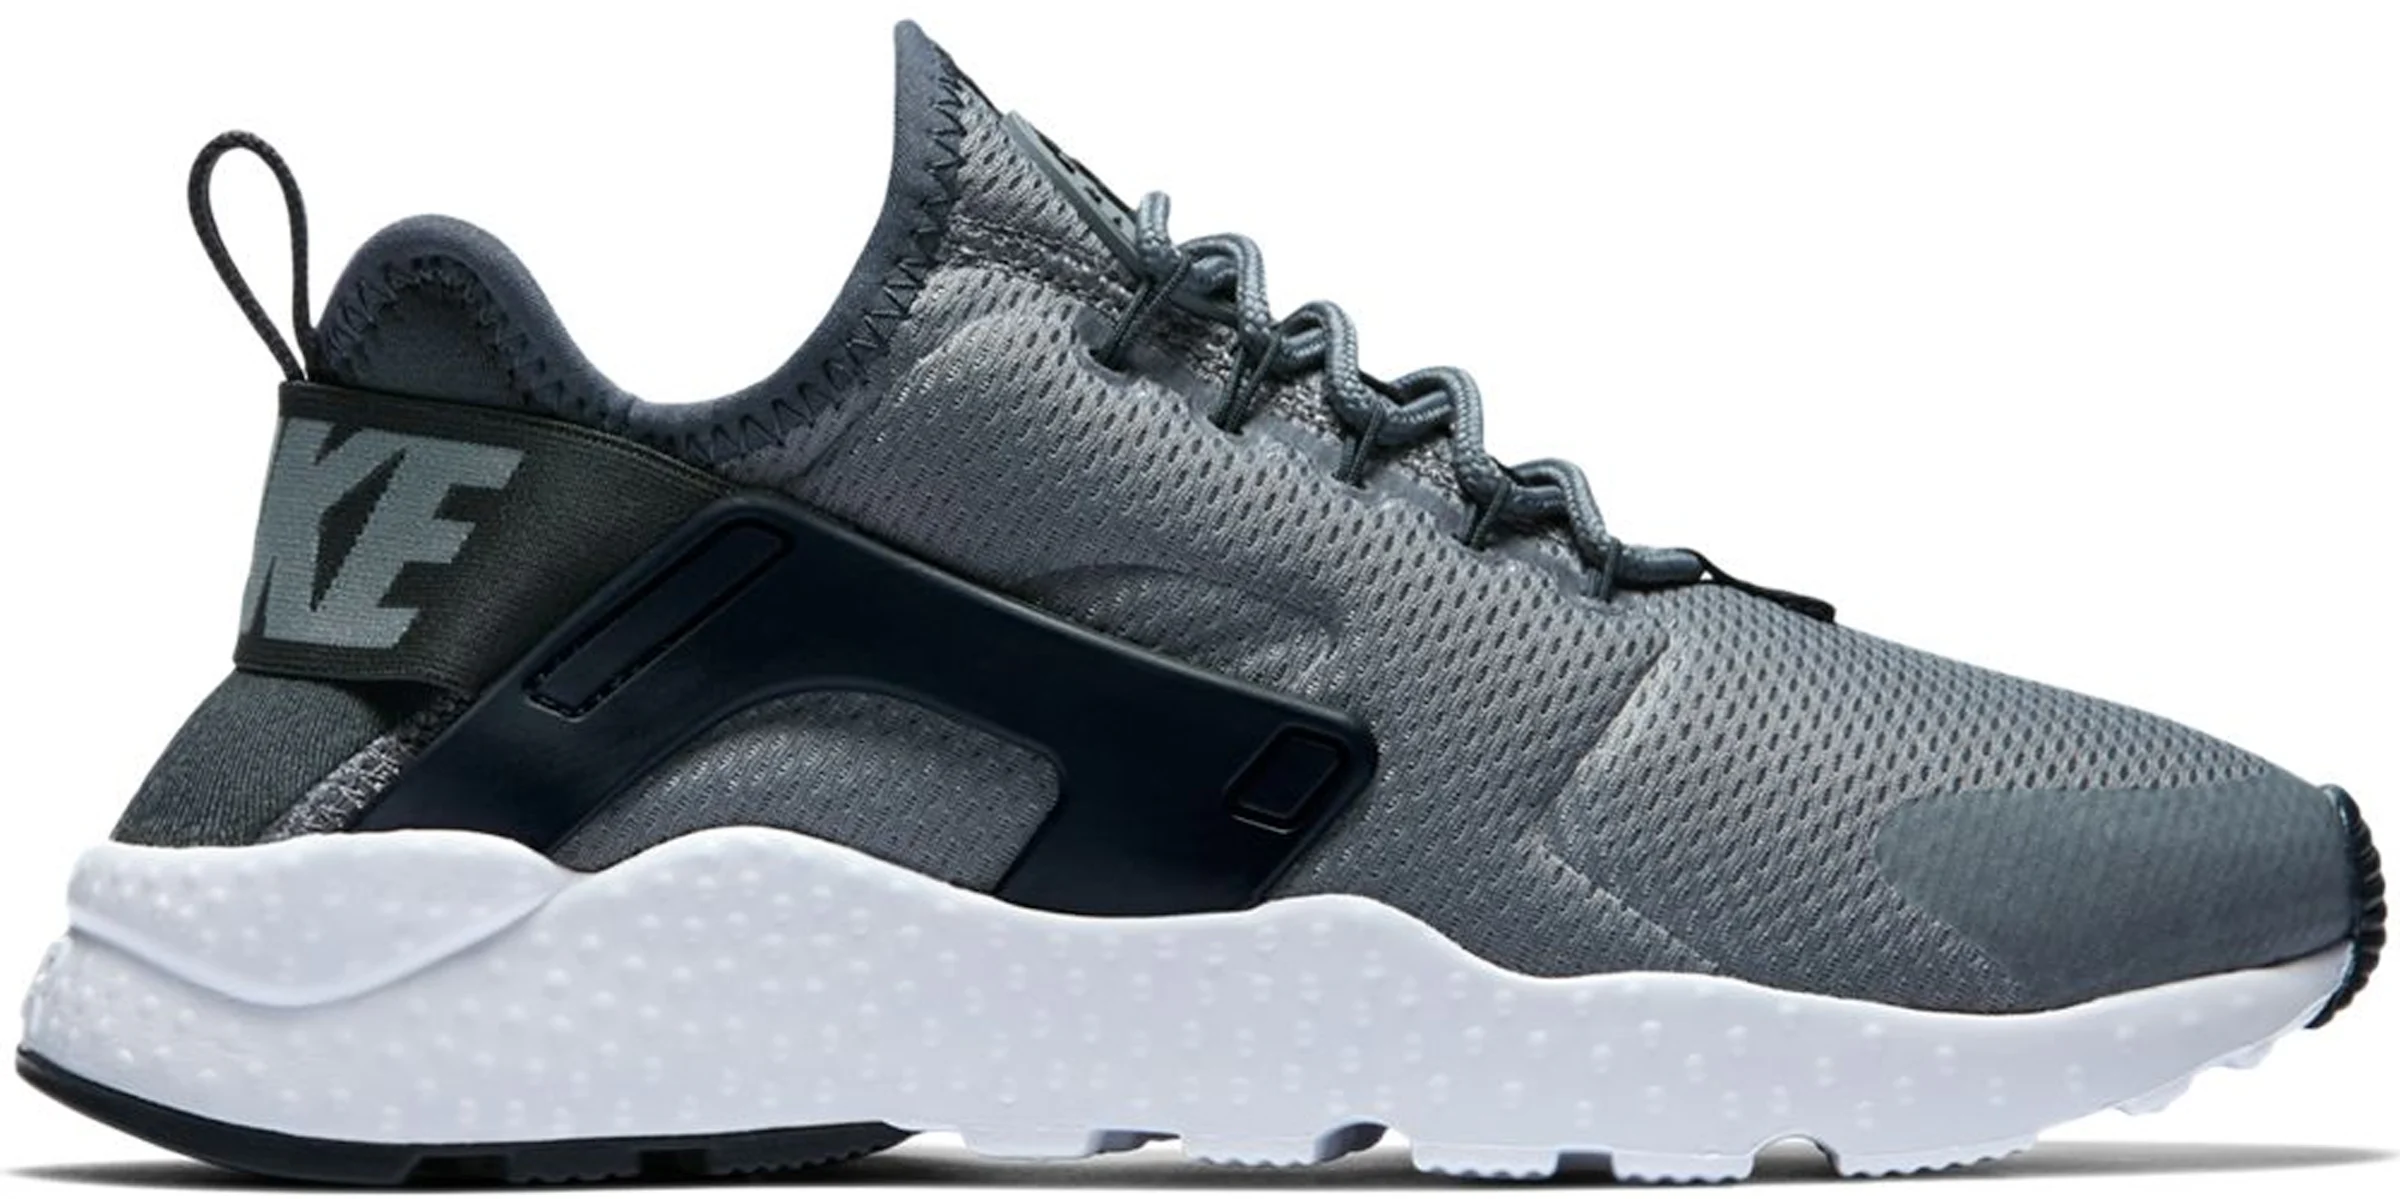 Nike Air Huarache Run Ultra Cool Grey Black (Women's) - 819151